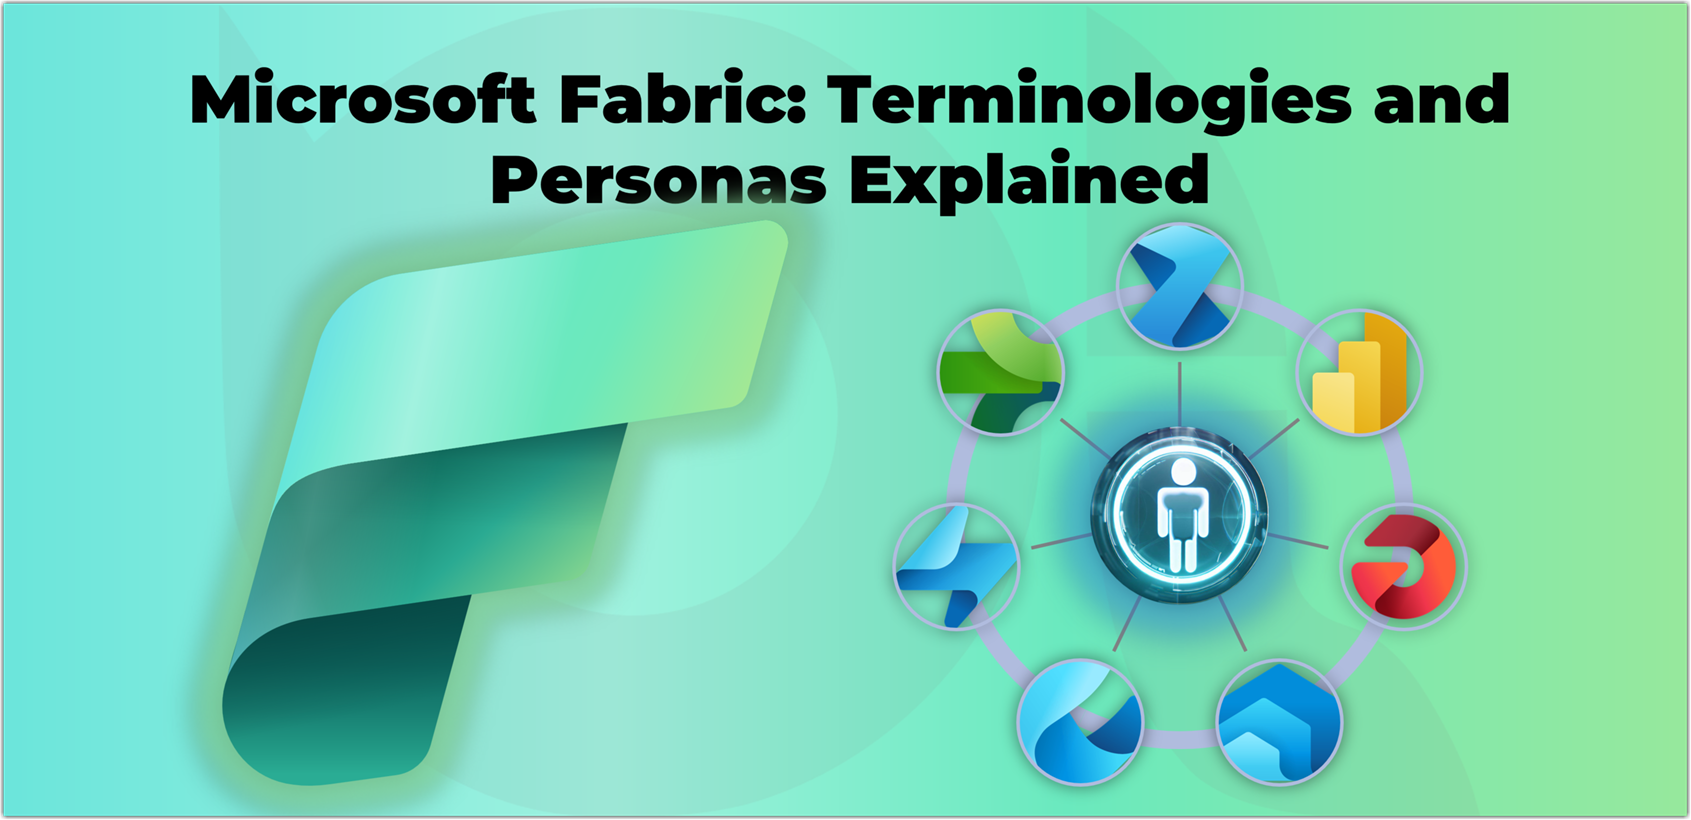 Microsoft Fabric: Terminologies and Personas Explained